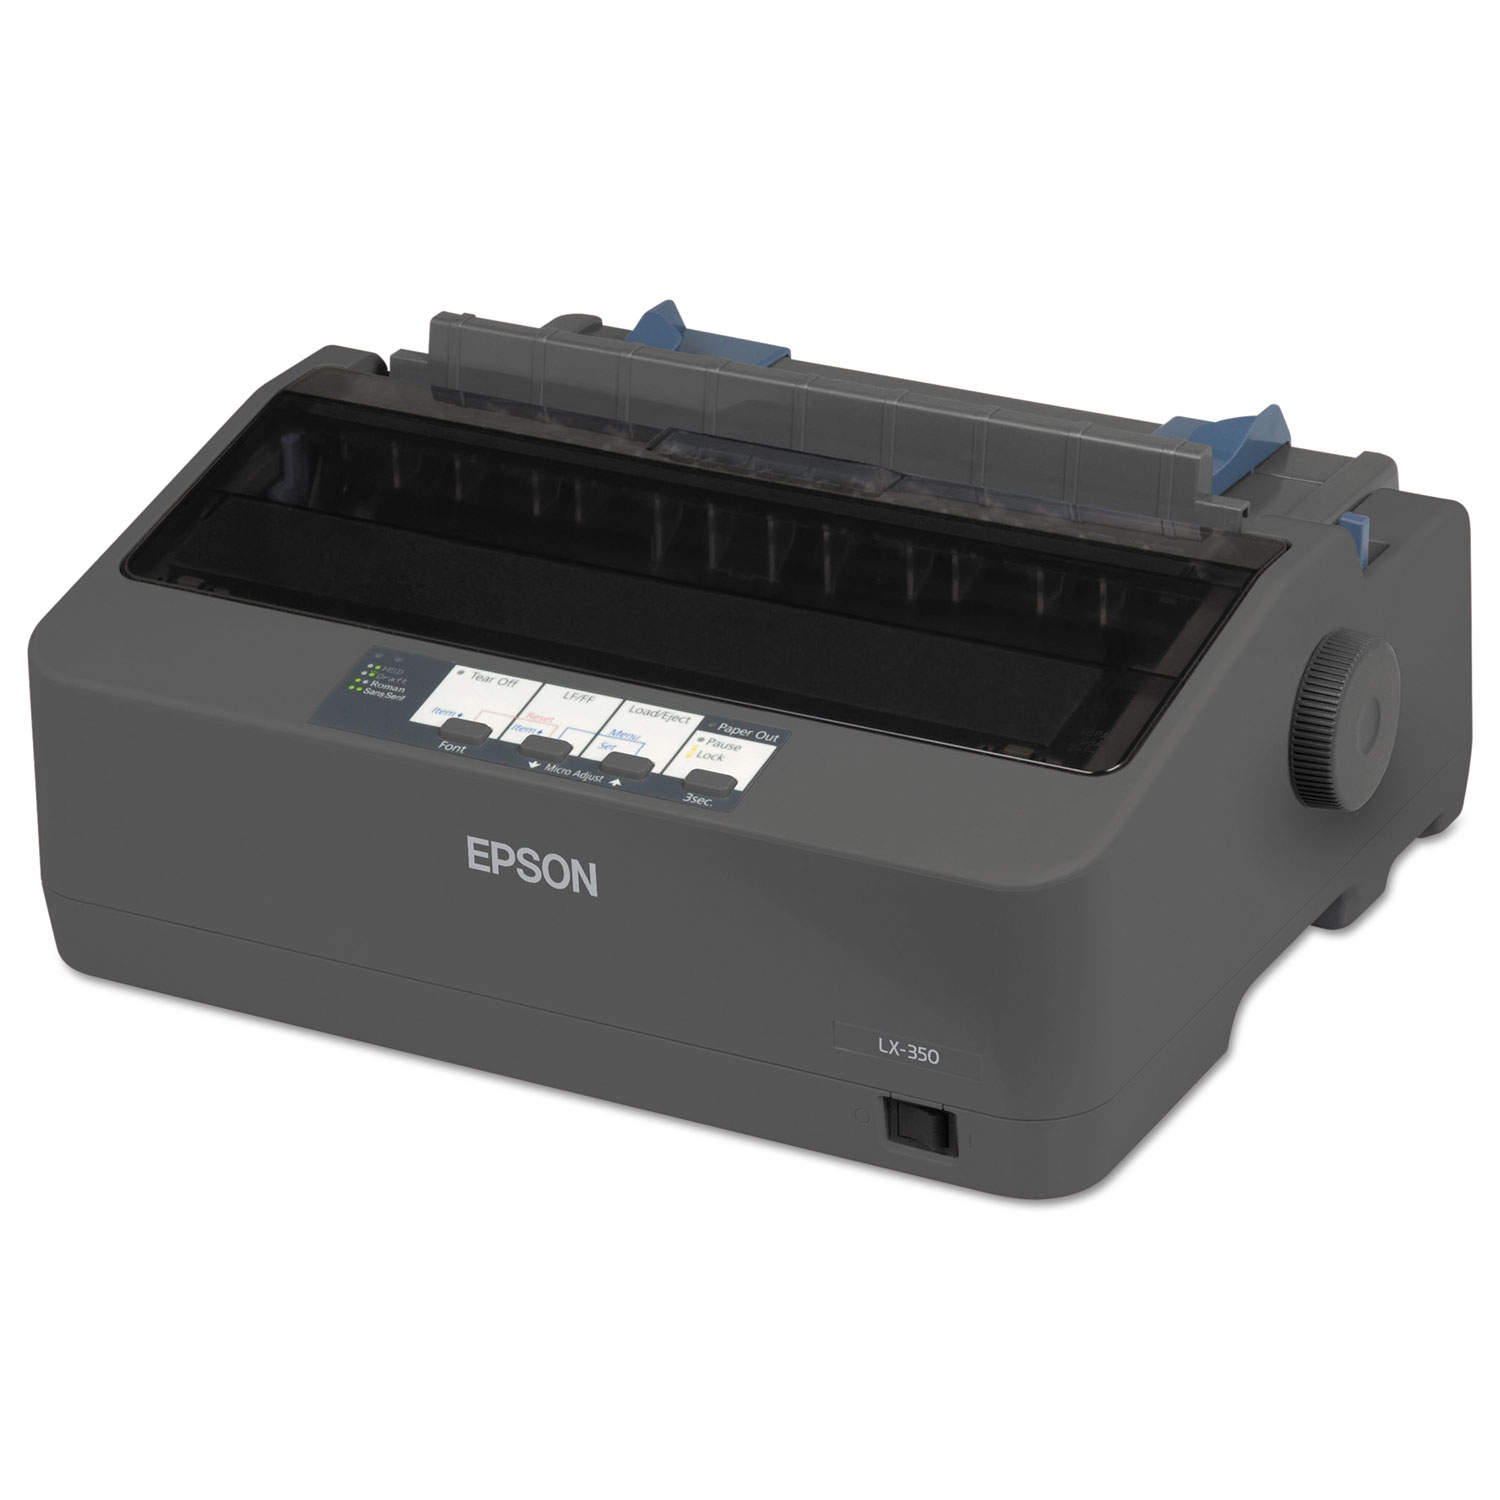  Epson C11CC24001 LX-350 Dot Matrix Printer, 9 Pins, Narrow Carriage (EPSC11CC24001) 